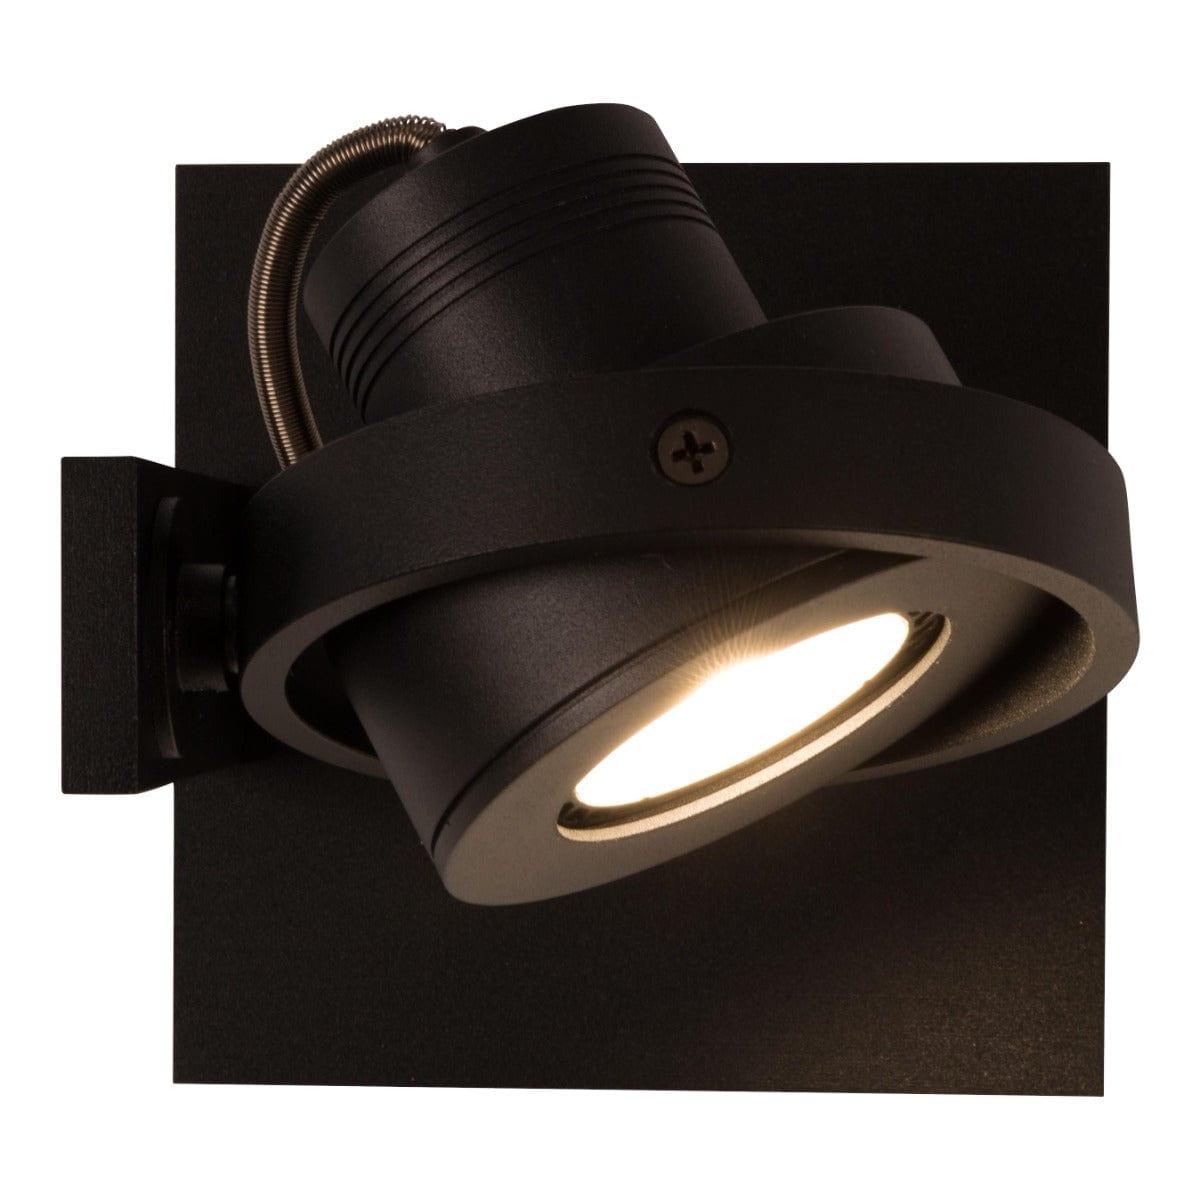 Lampa punktowa LUCI czarny Zuiver    Eye on Design